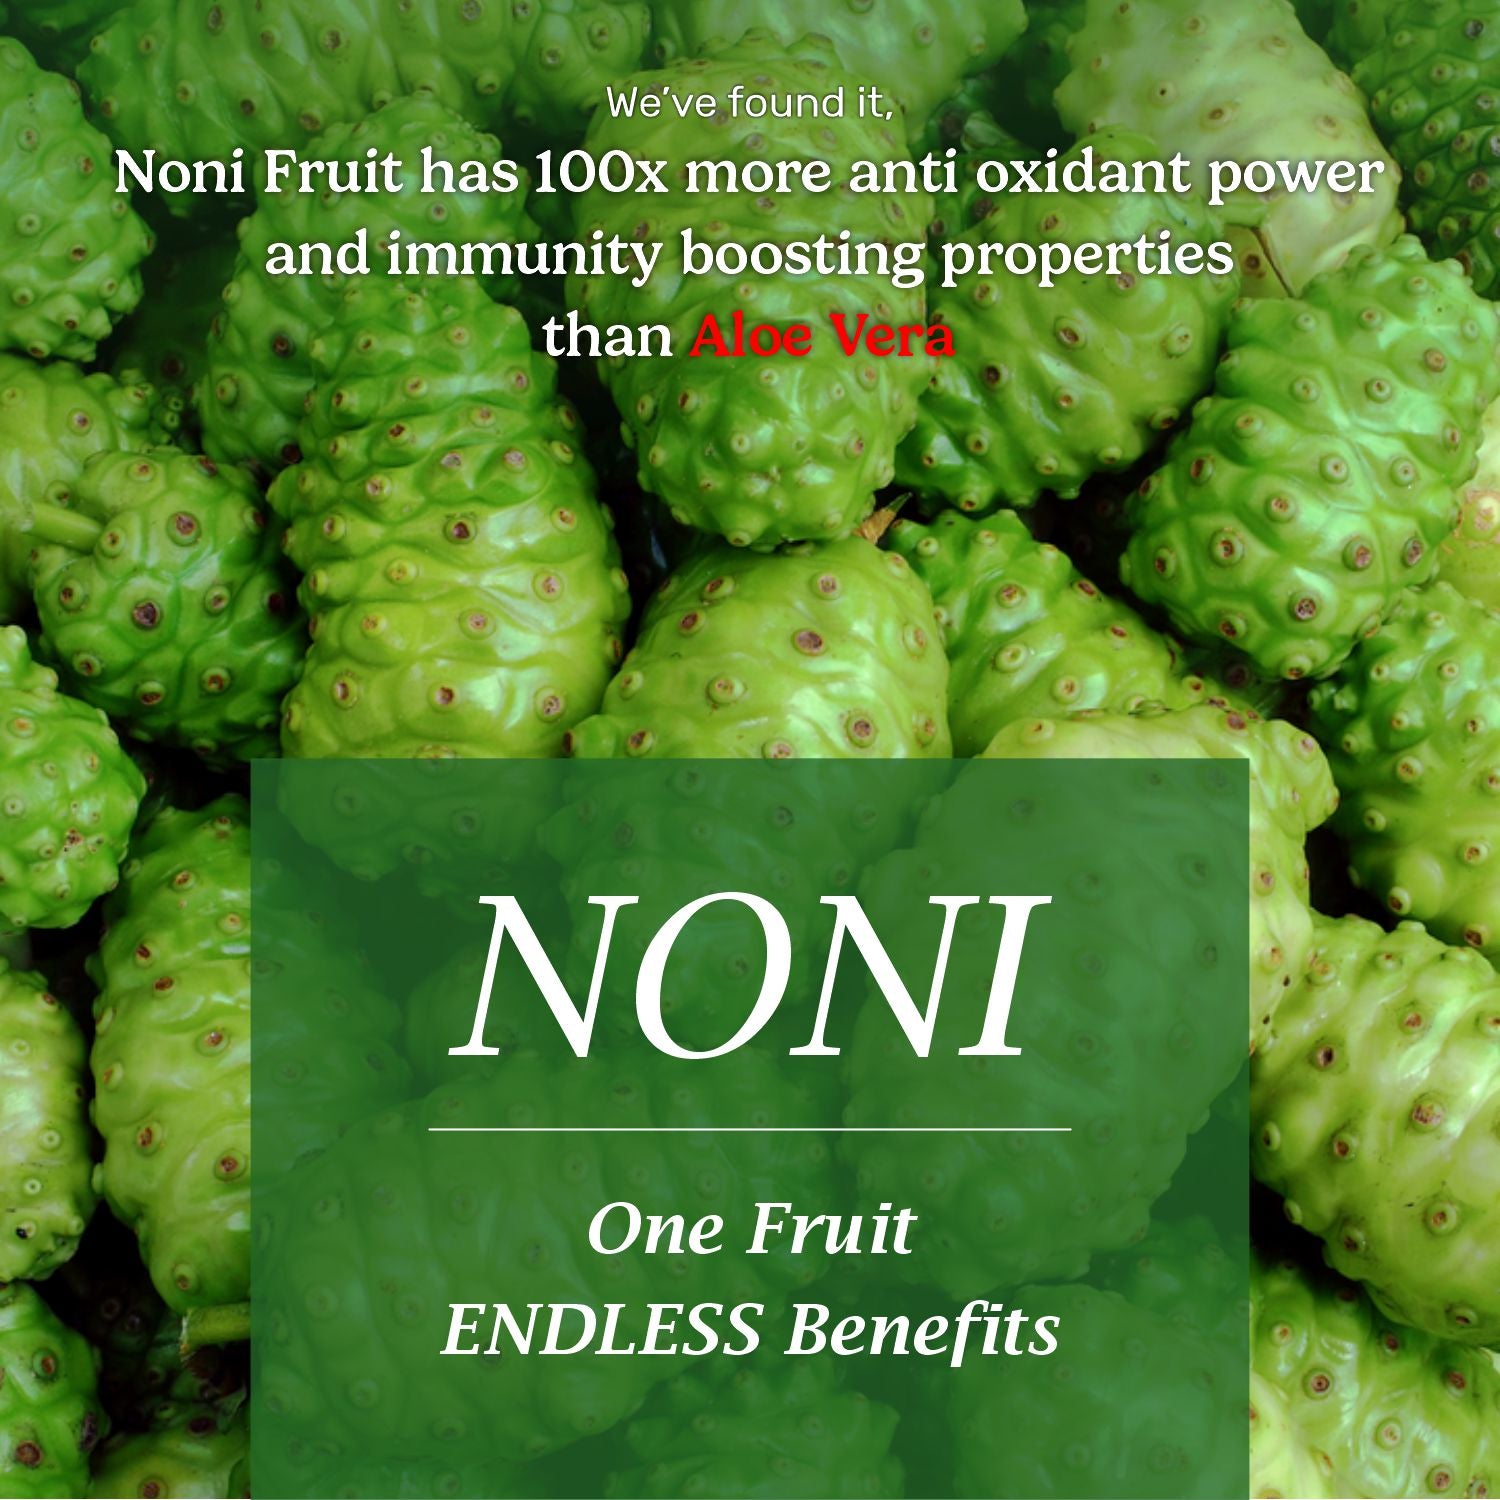 Noni 365 Wellness Drink 500 ML | Noni Juice ( Pack of 3 )